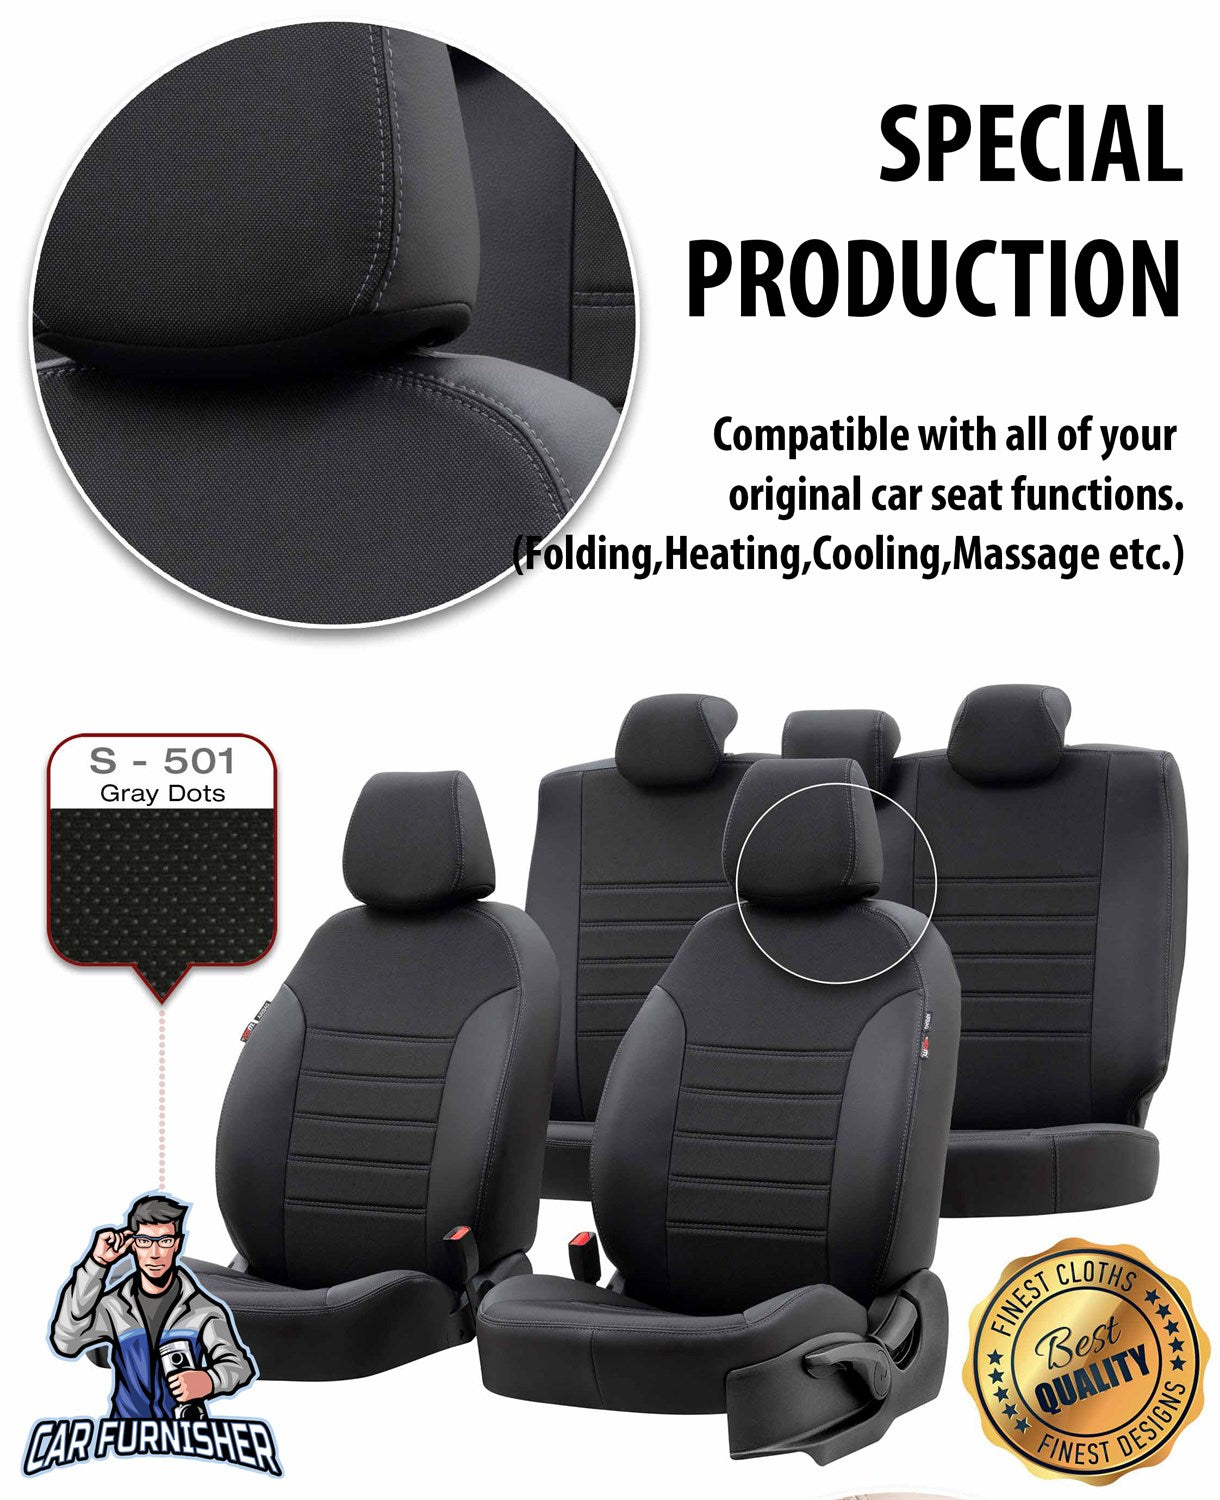 Iveco Eurocargo Seat Cover Original Jacquard Design Black Leather & Jacquard Fabric